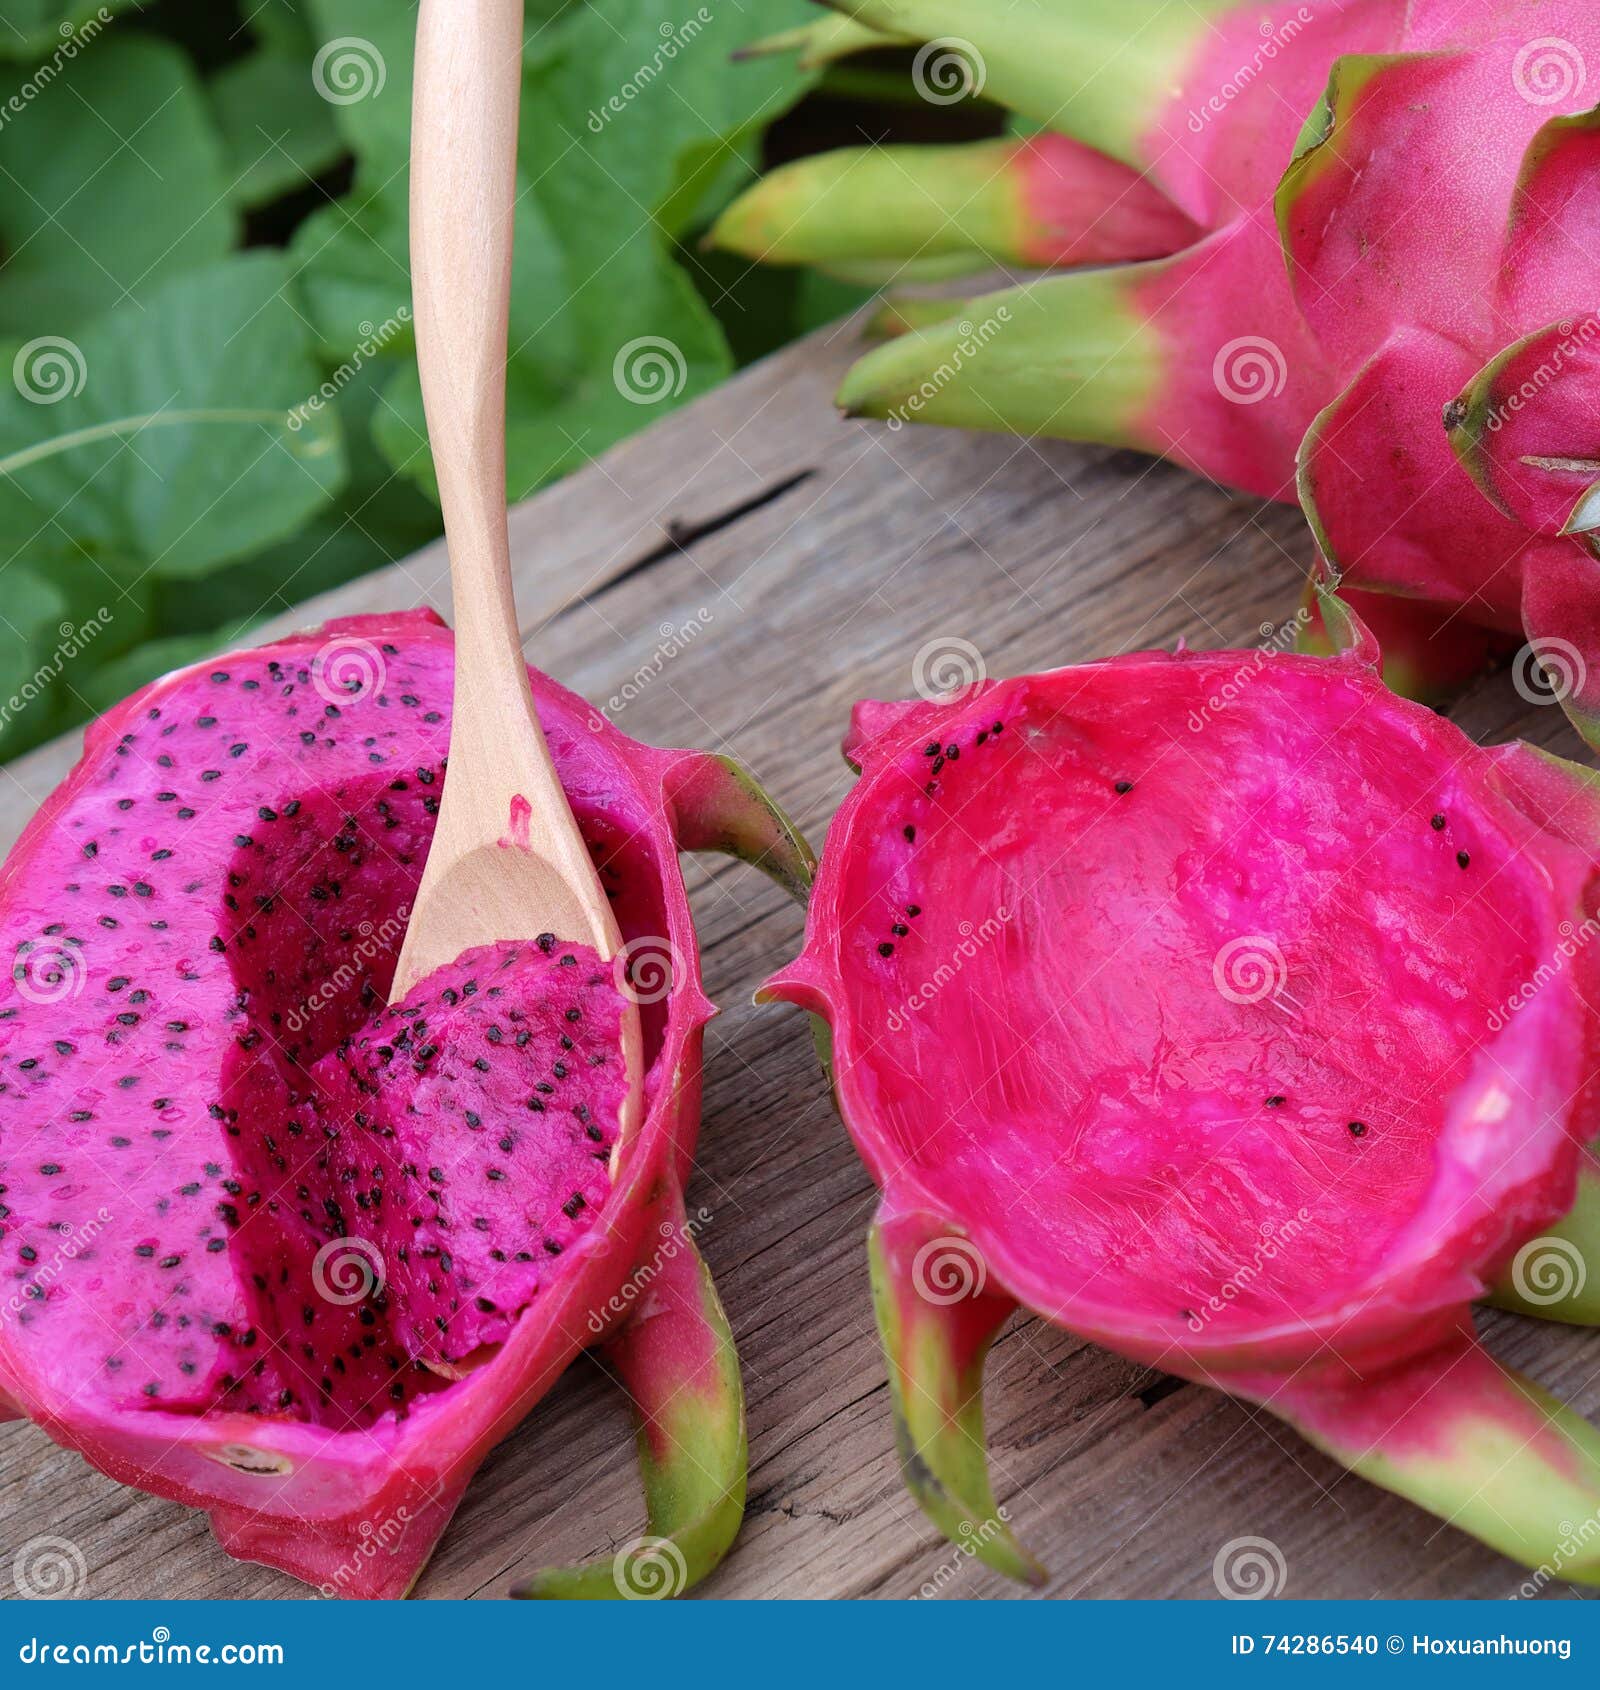 dragon fruit, tropical fruits, vietnam agriculture stock photo